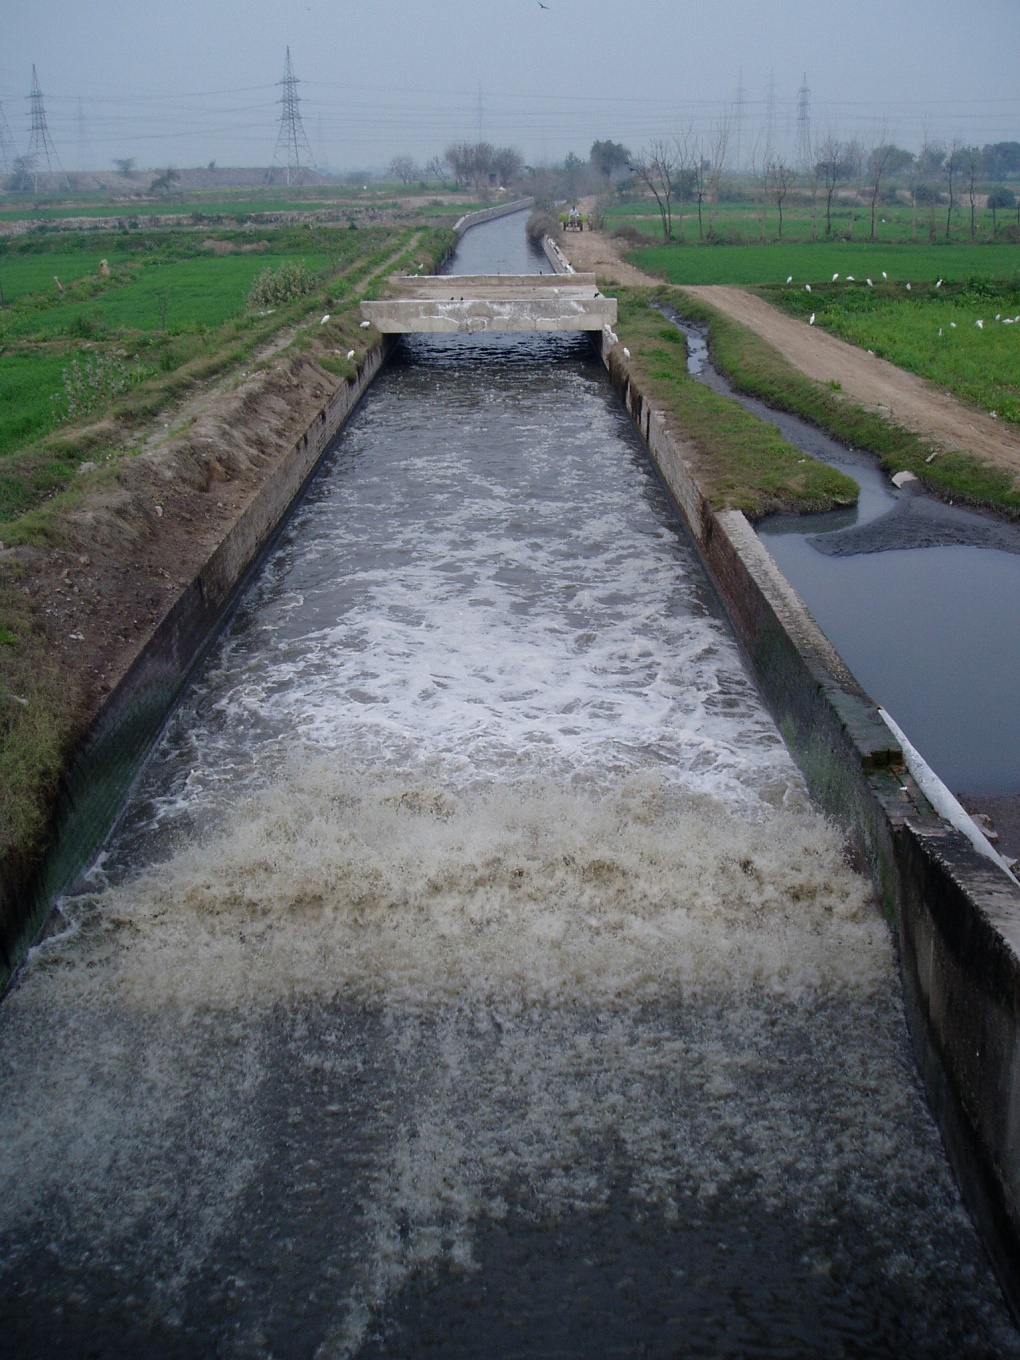 Pakistan's water infrastructure needs critical upgrades [image by IFC/Nicola Saporiti]